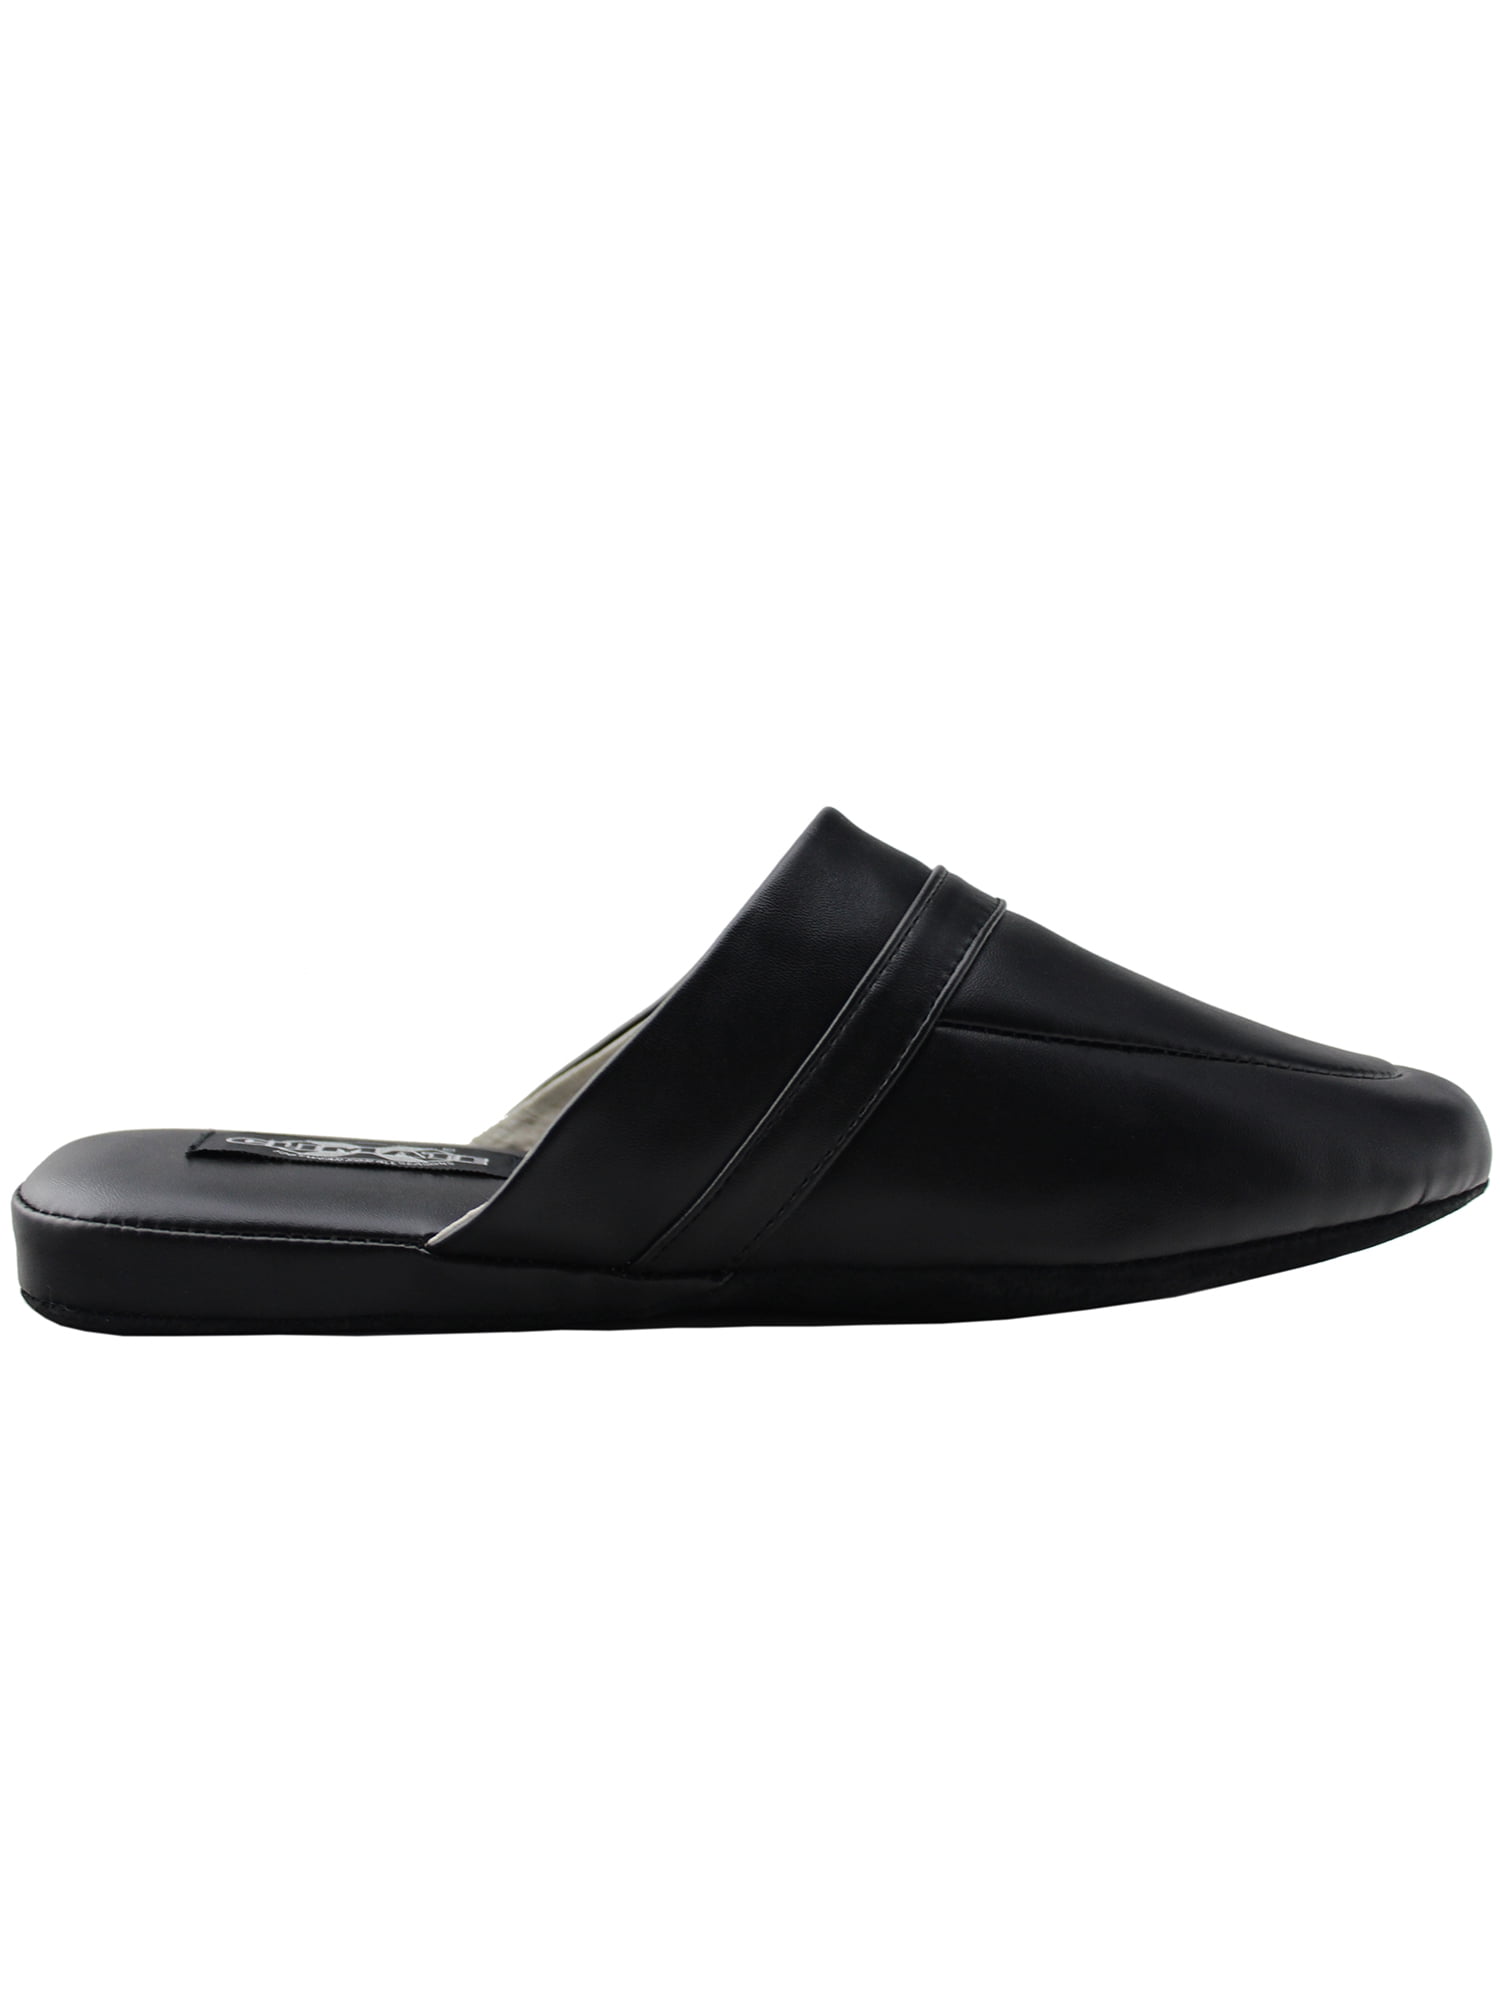 31.91$ Men's Classical Comfortable Flip Flops Rubber Slippers Casual  Leather Sandals - _Black - CM183423XIE | Casual leather sandals, Rubber  slippers, Casual slippers